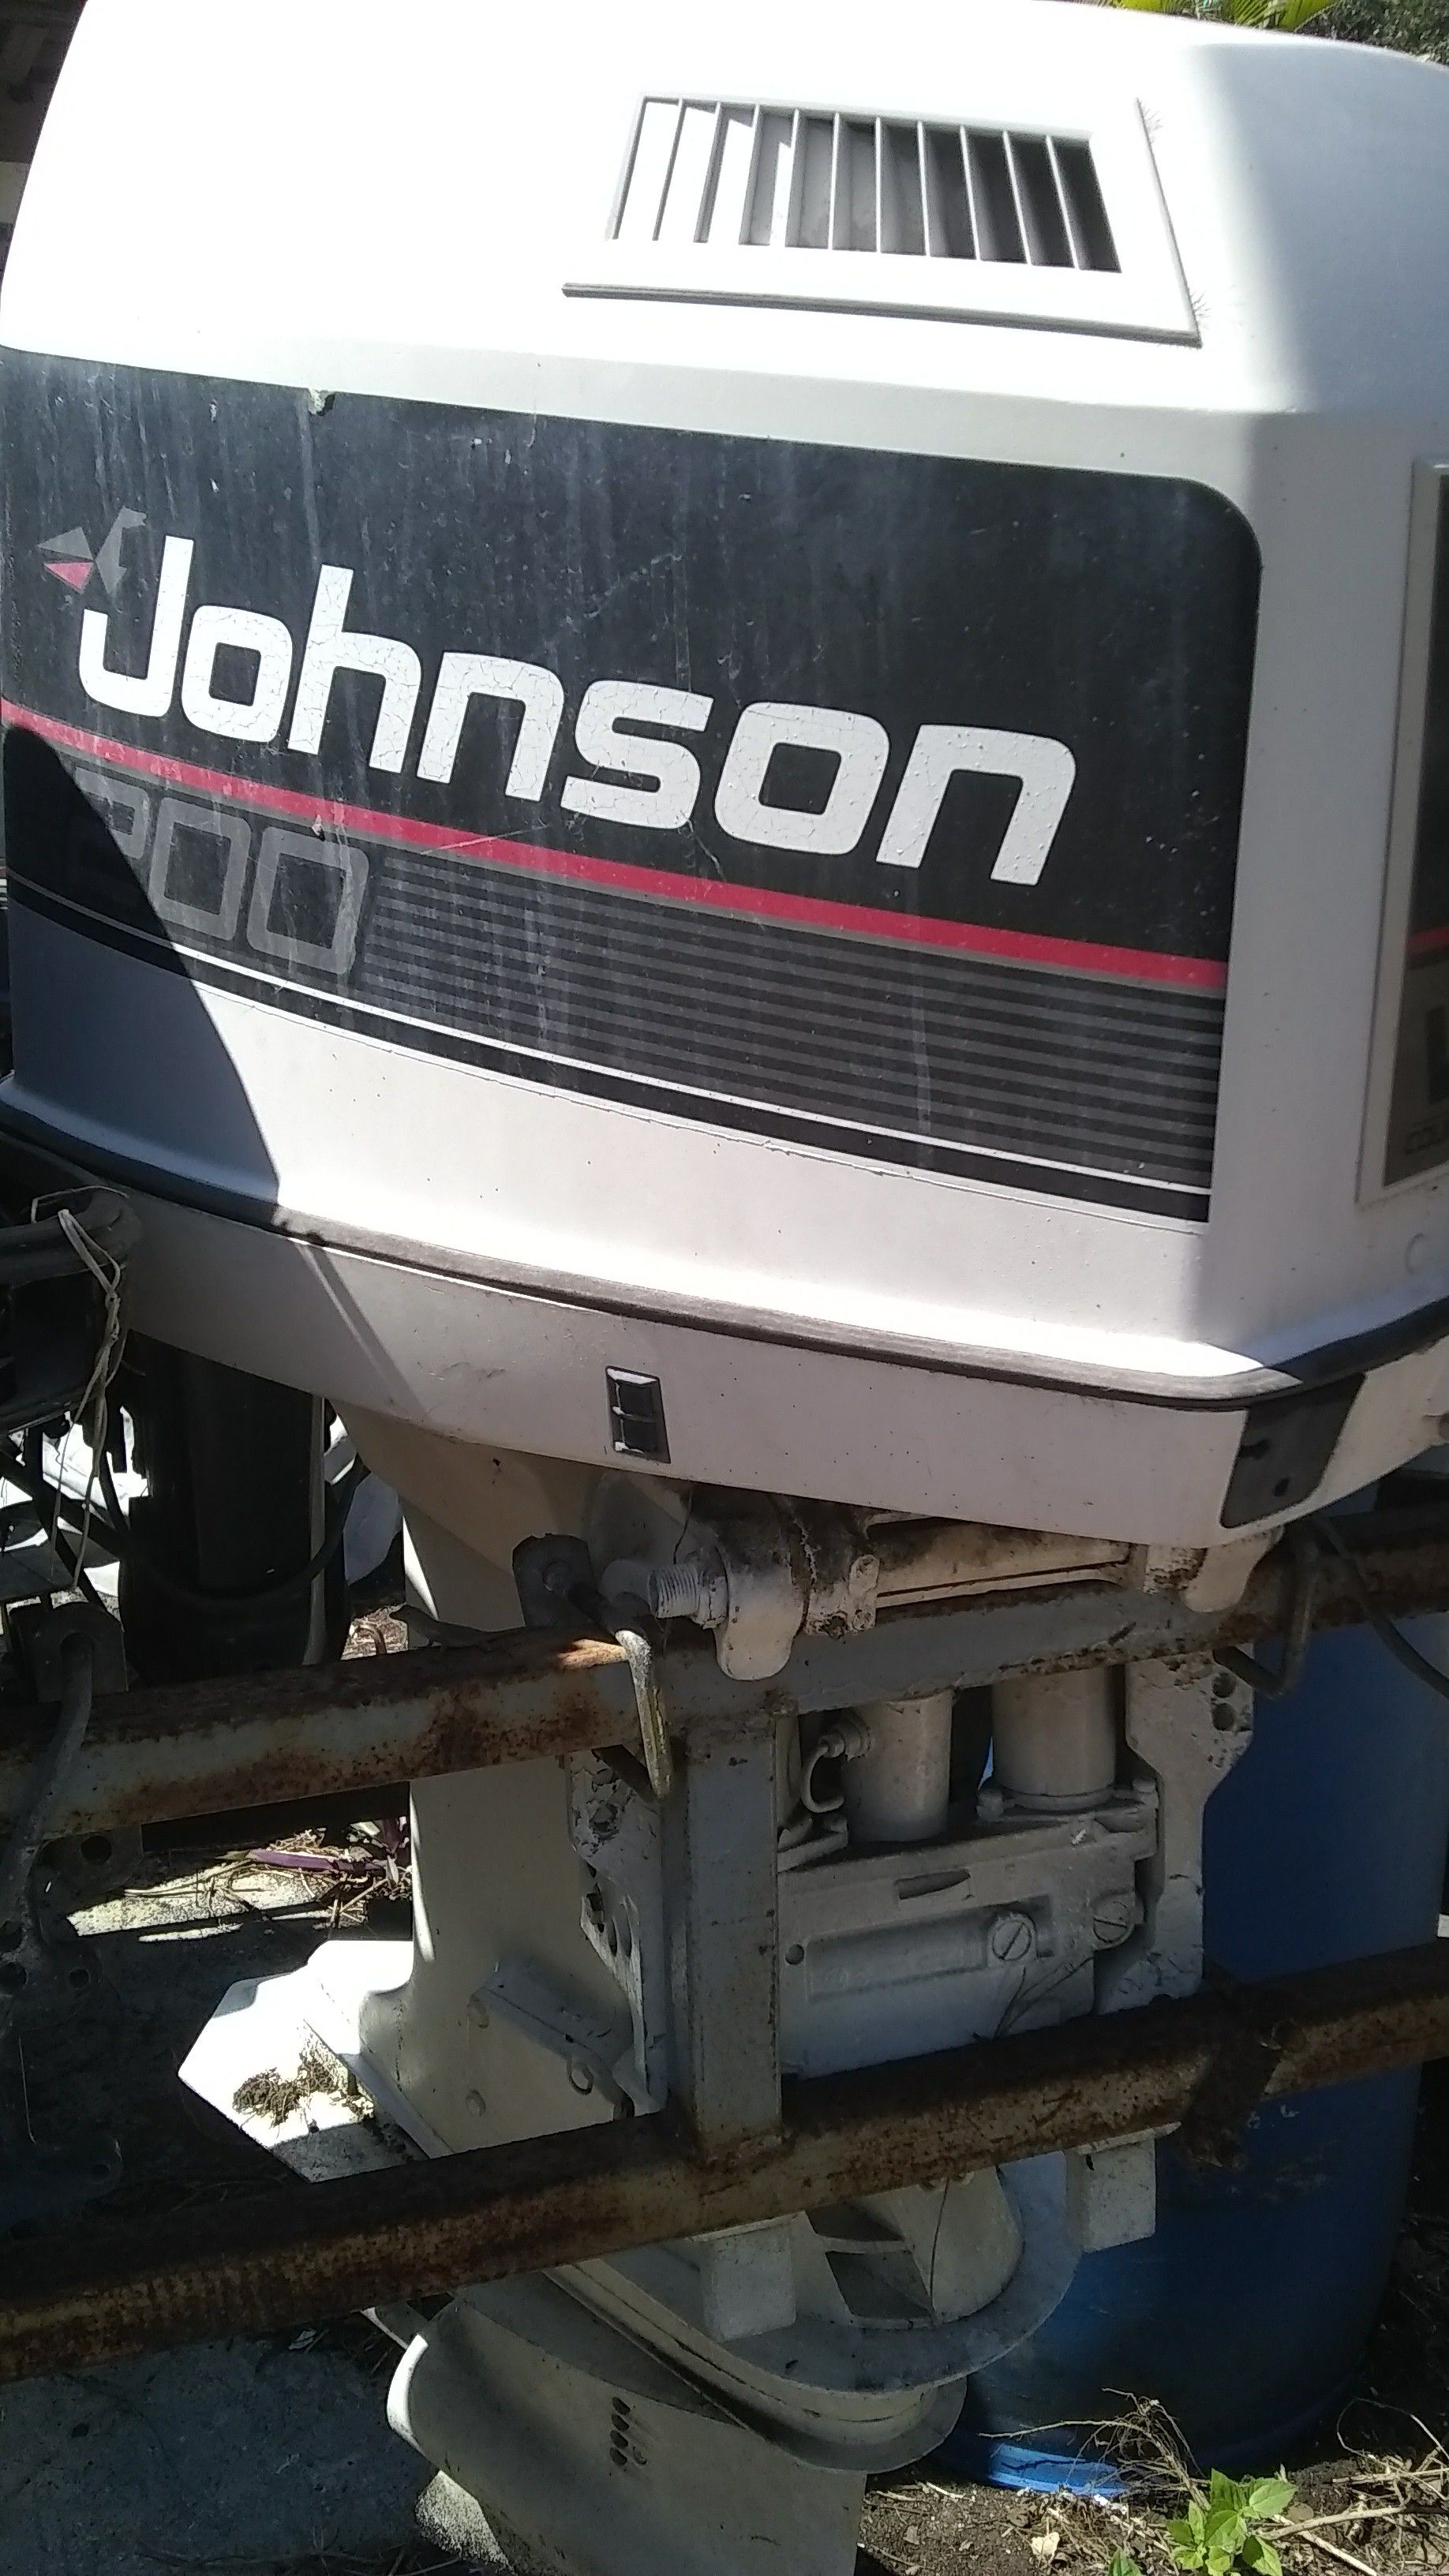 1988 Johnson outboard motor 200 hp